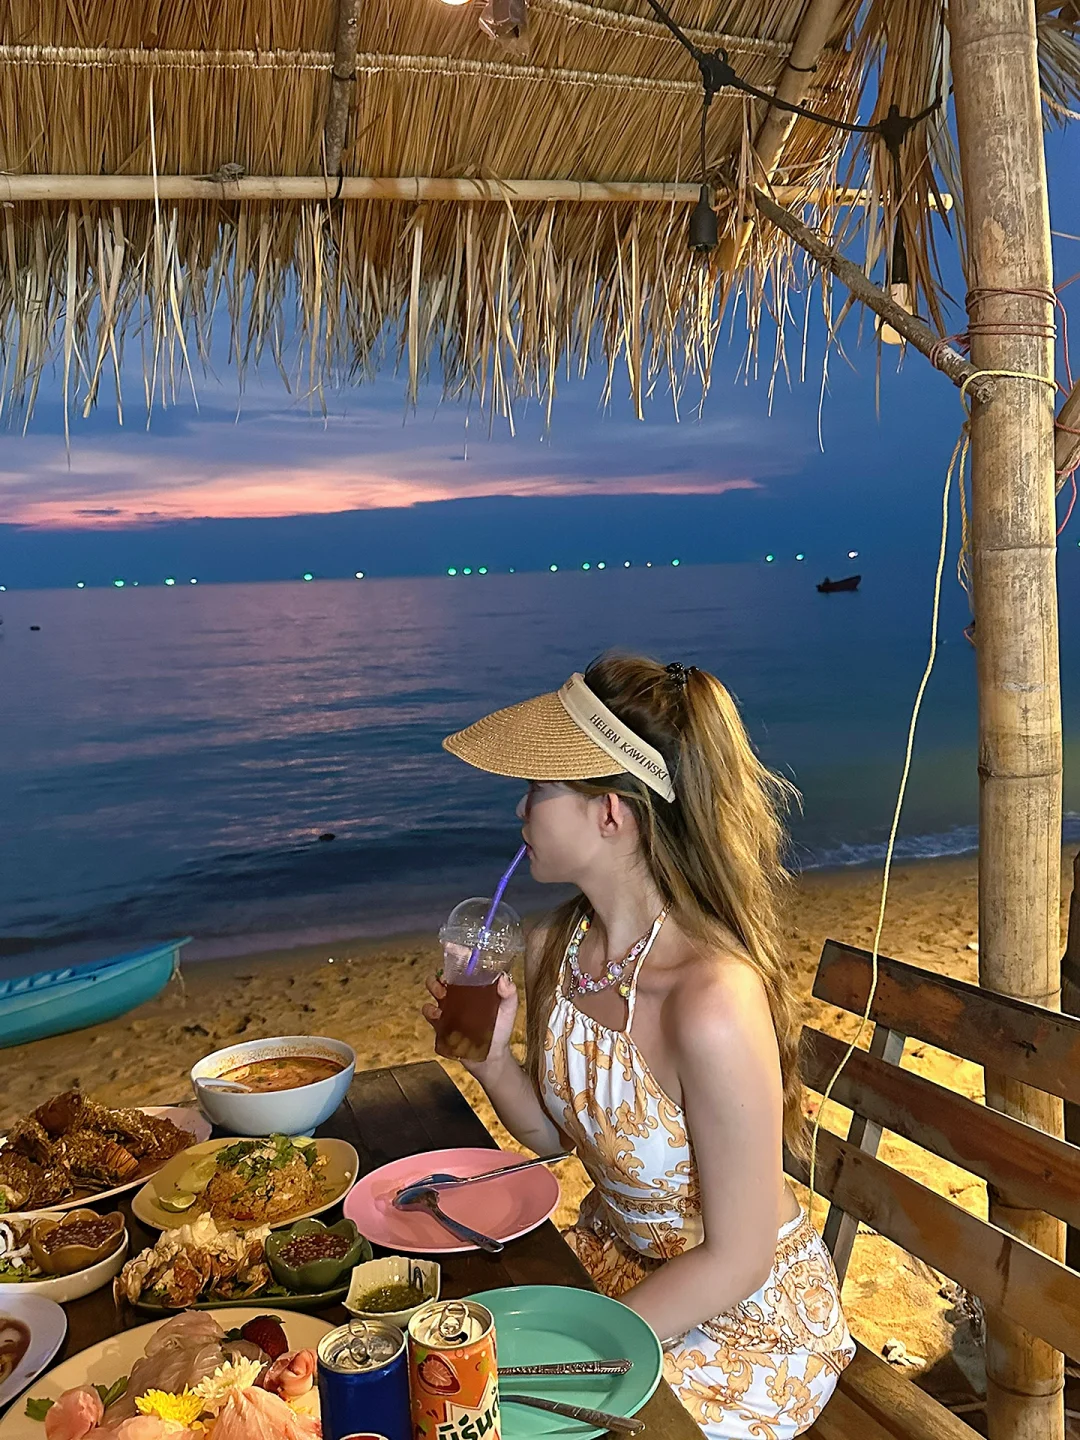 Tai Uan Seafood, Pattaya beachfront restaurant, great scenery and food